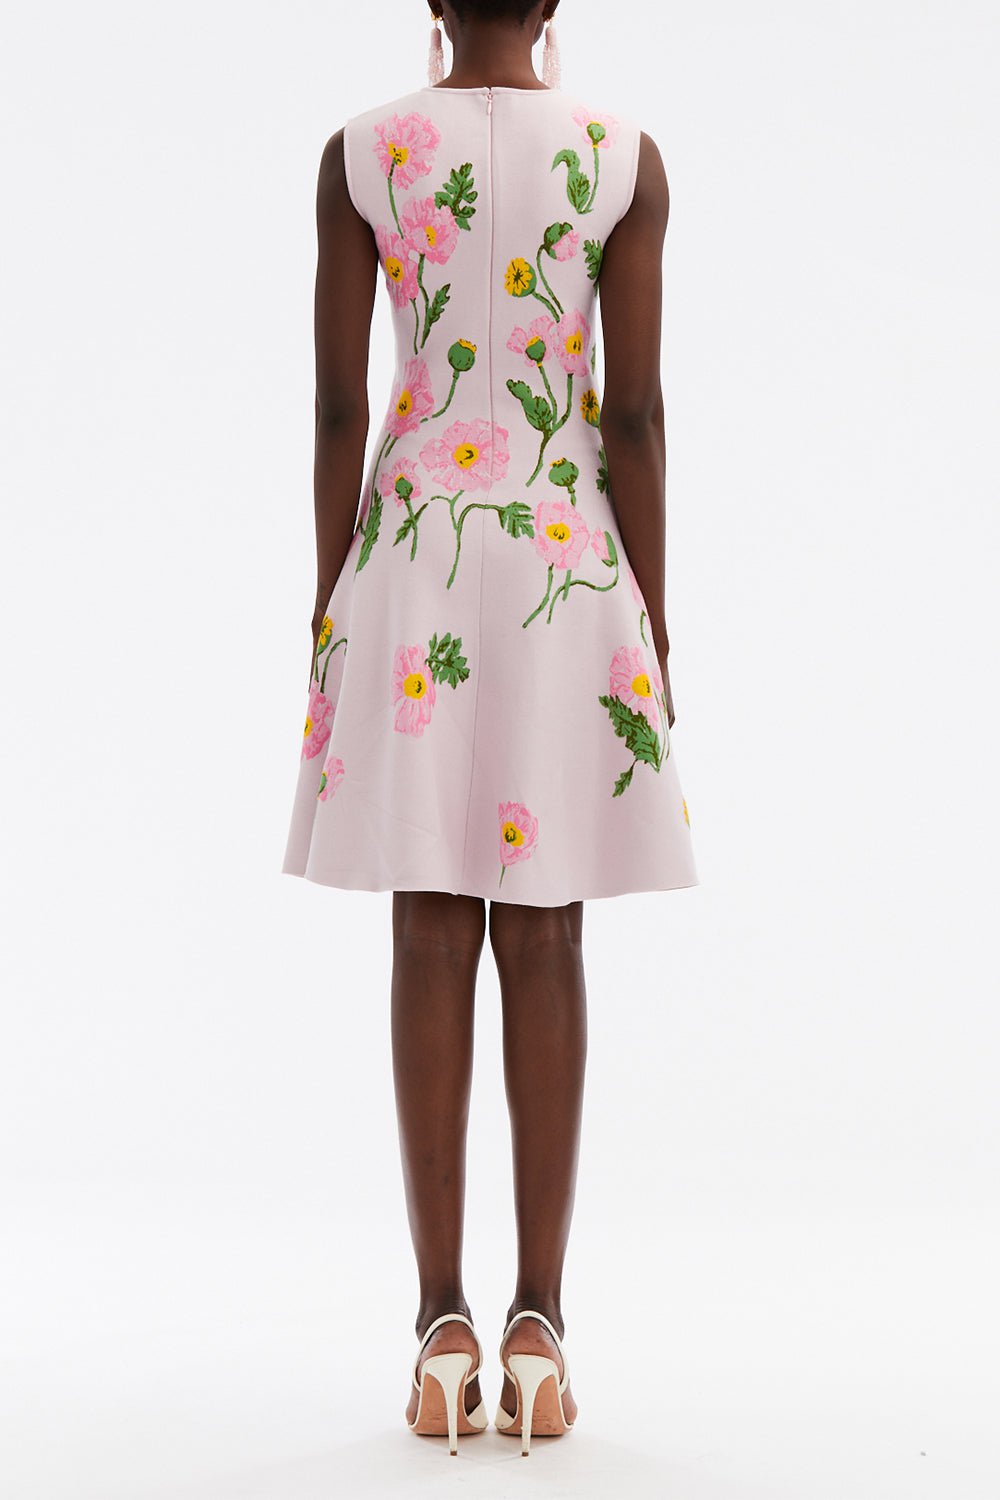 OSCAR DE LA RENTA-Printed Poppies Fit And Flare Dress-